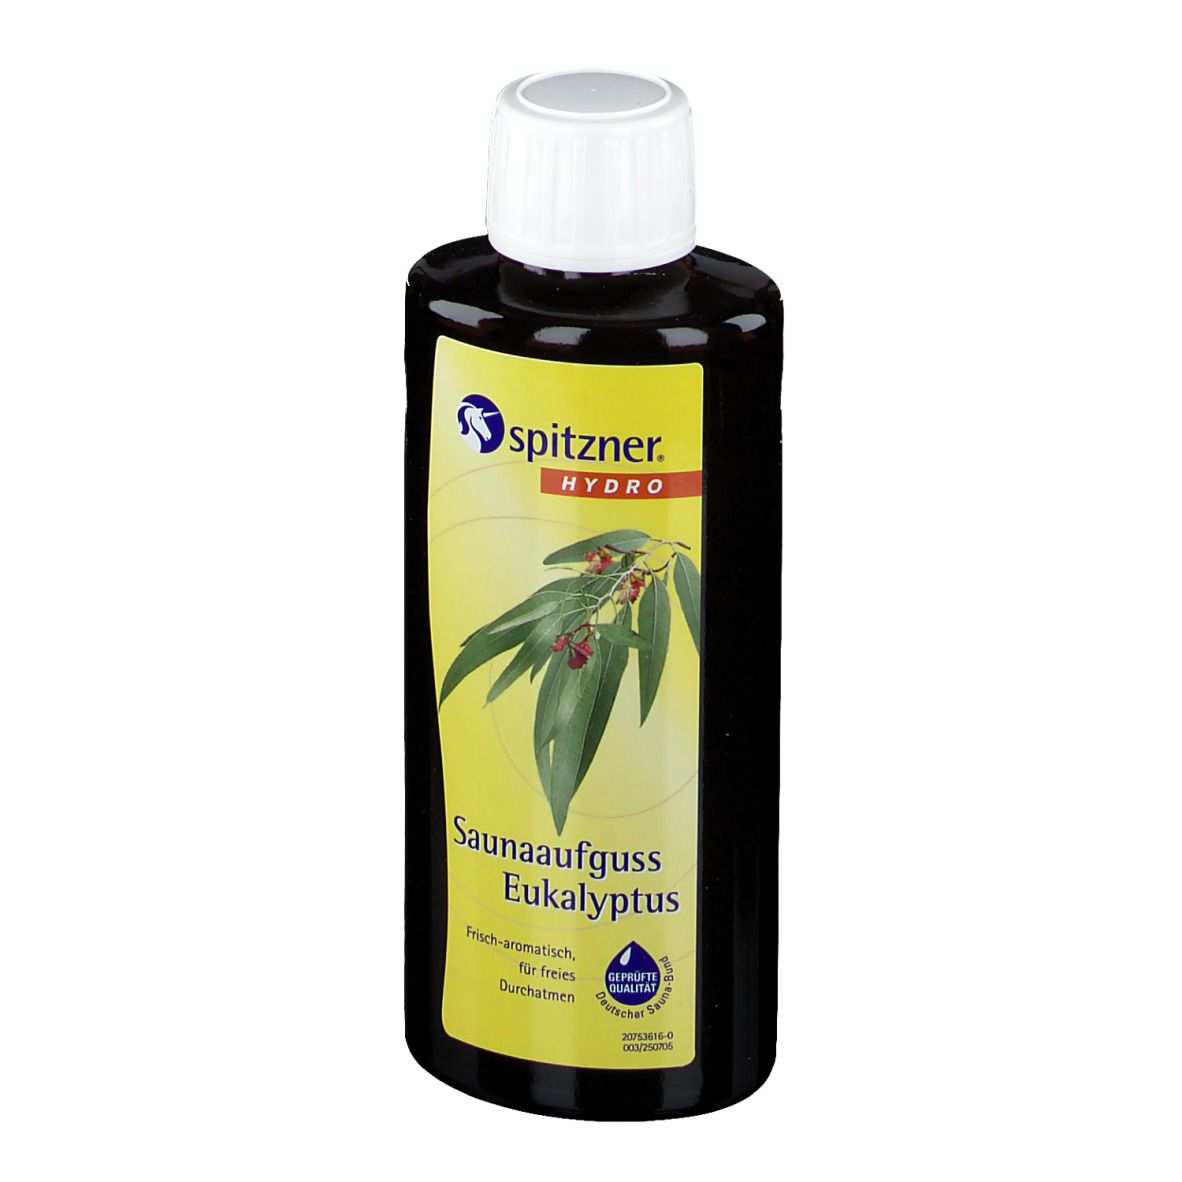 Spitzner® Hydro Saunaaufguss Eukalyptus